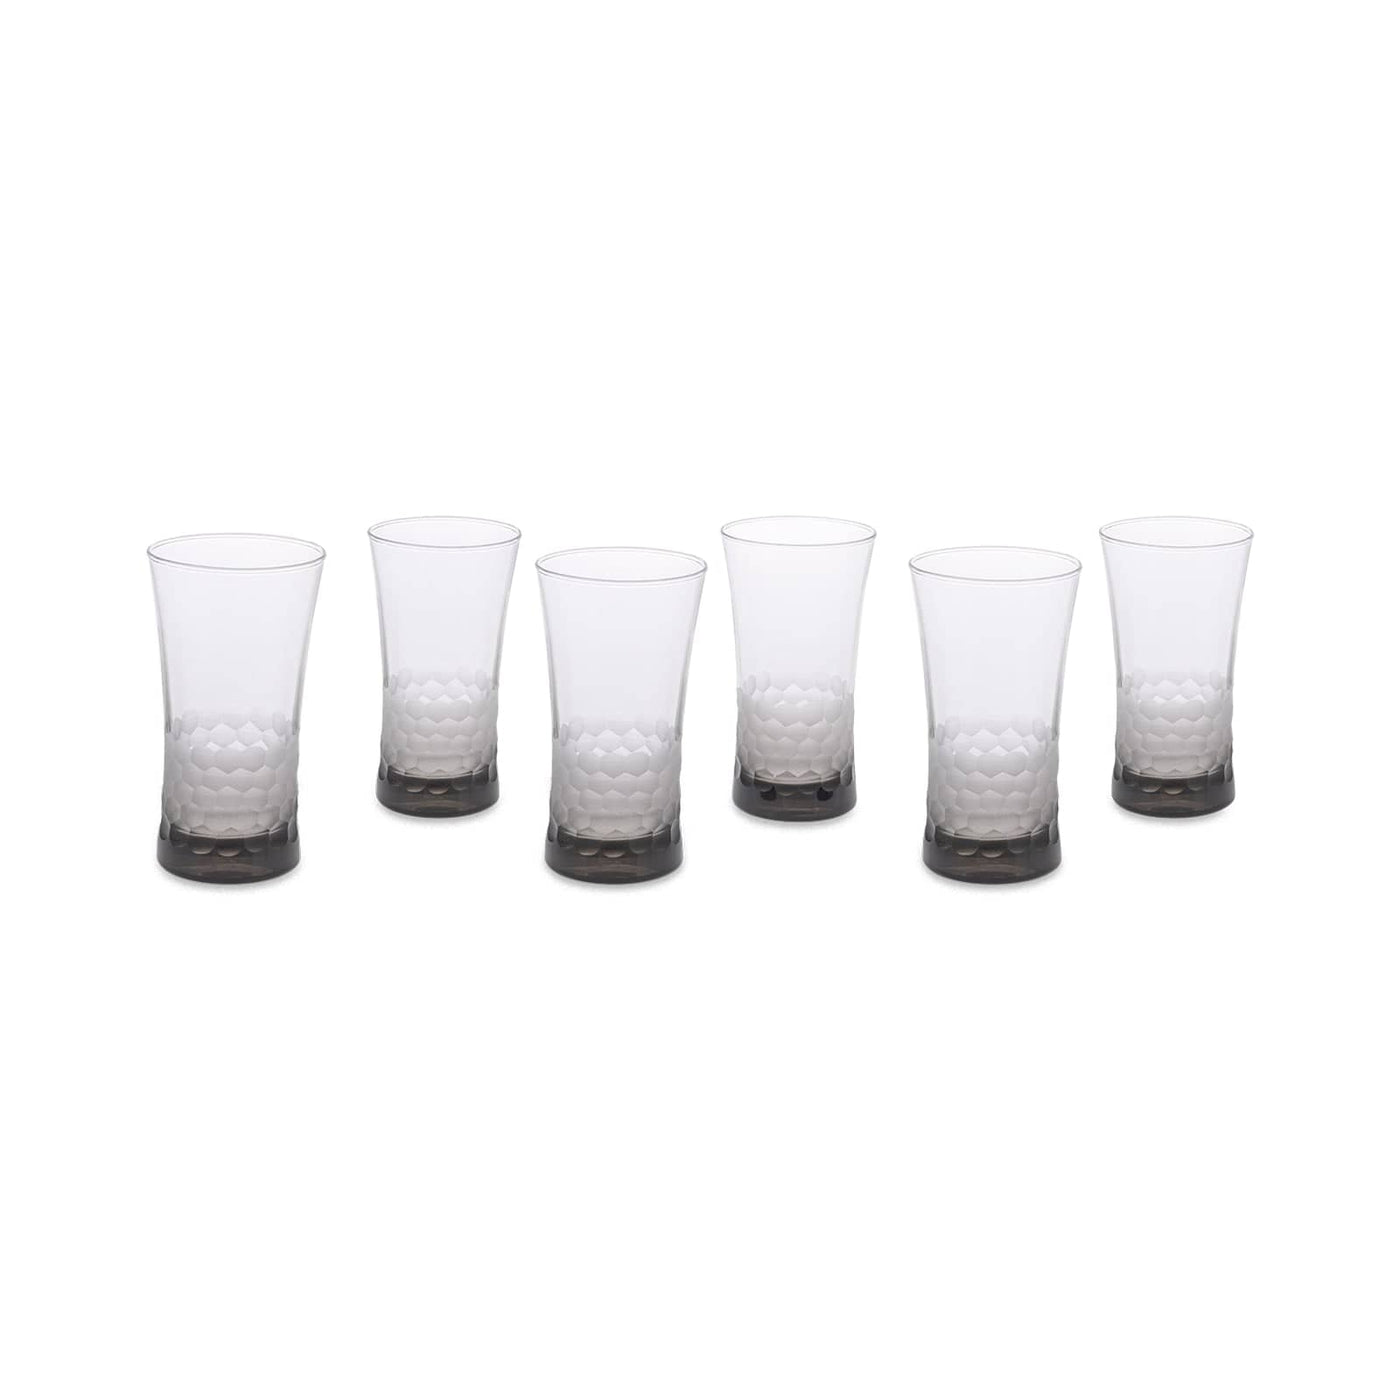 Bermondsey Set of 6 Glass Tumblers, Anthracite Grey, 300 ml Glasses & Tumblers sazy.com